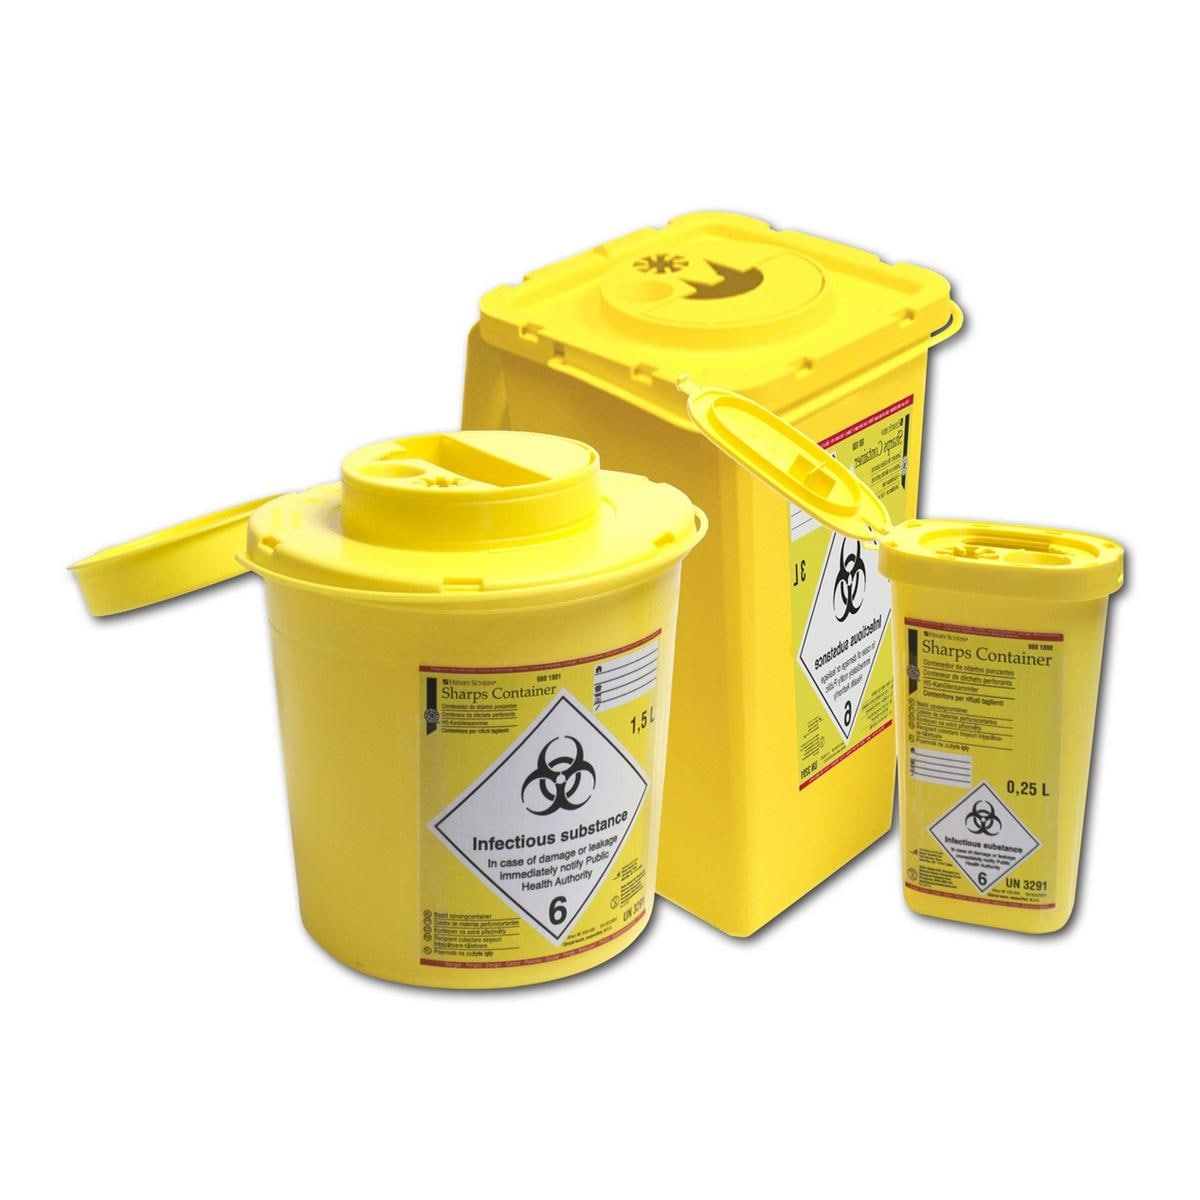 HS-Entsorgungsbehälter / Kanülensammler - 3,5 Liter, (B x T x H) 14,5 x 14,5 x 31,4 cm